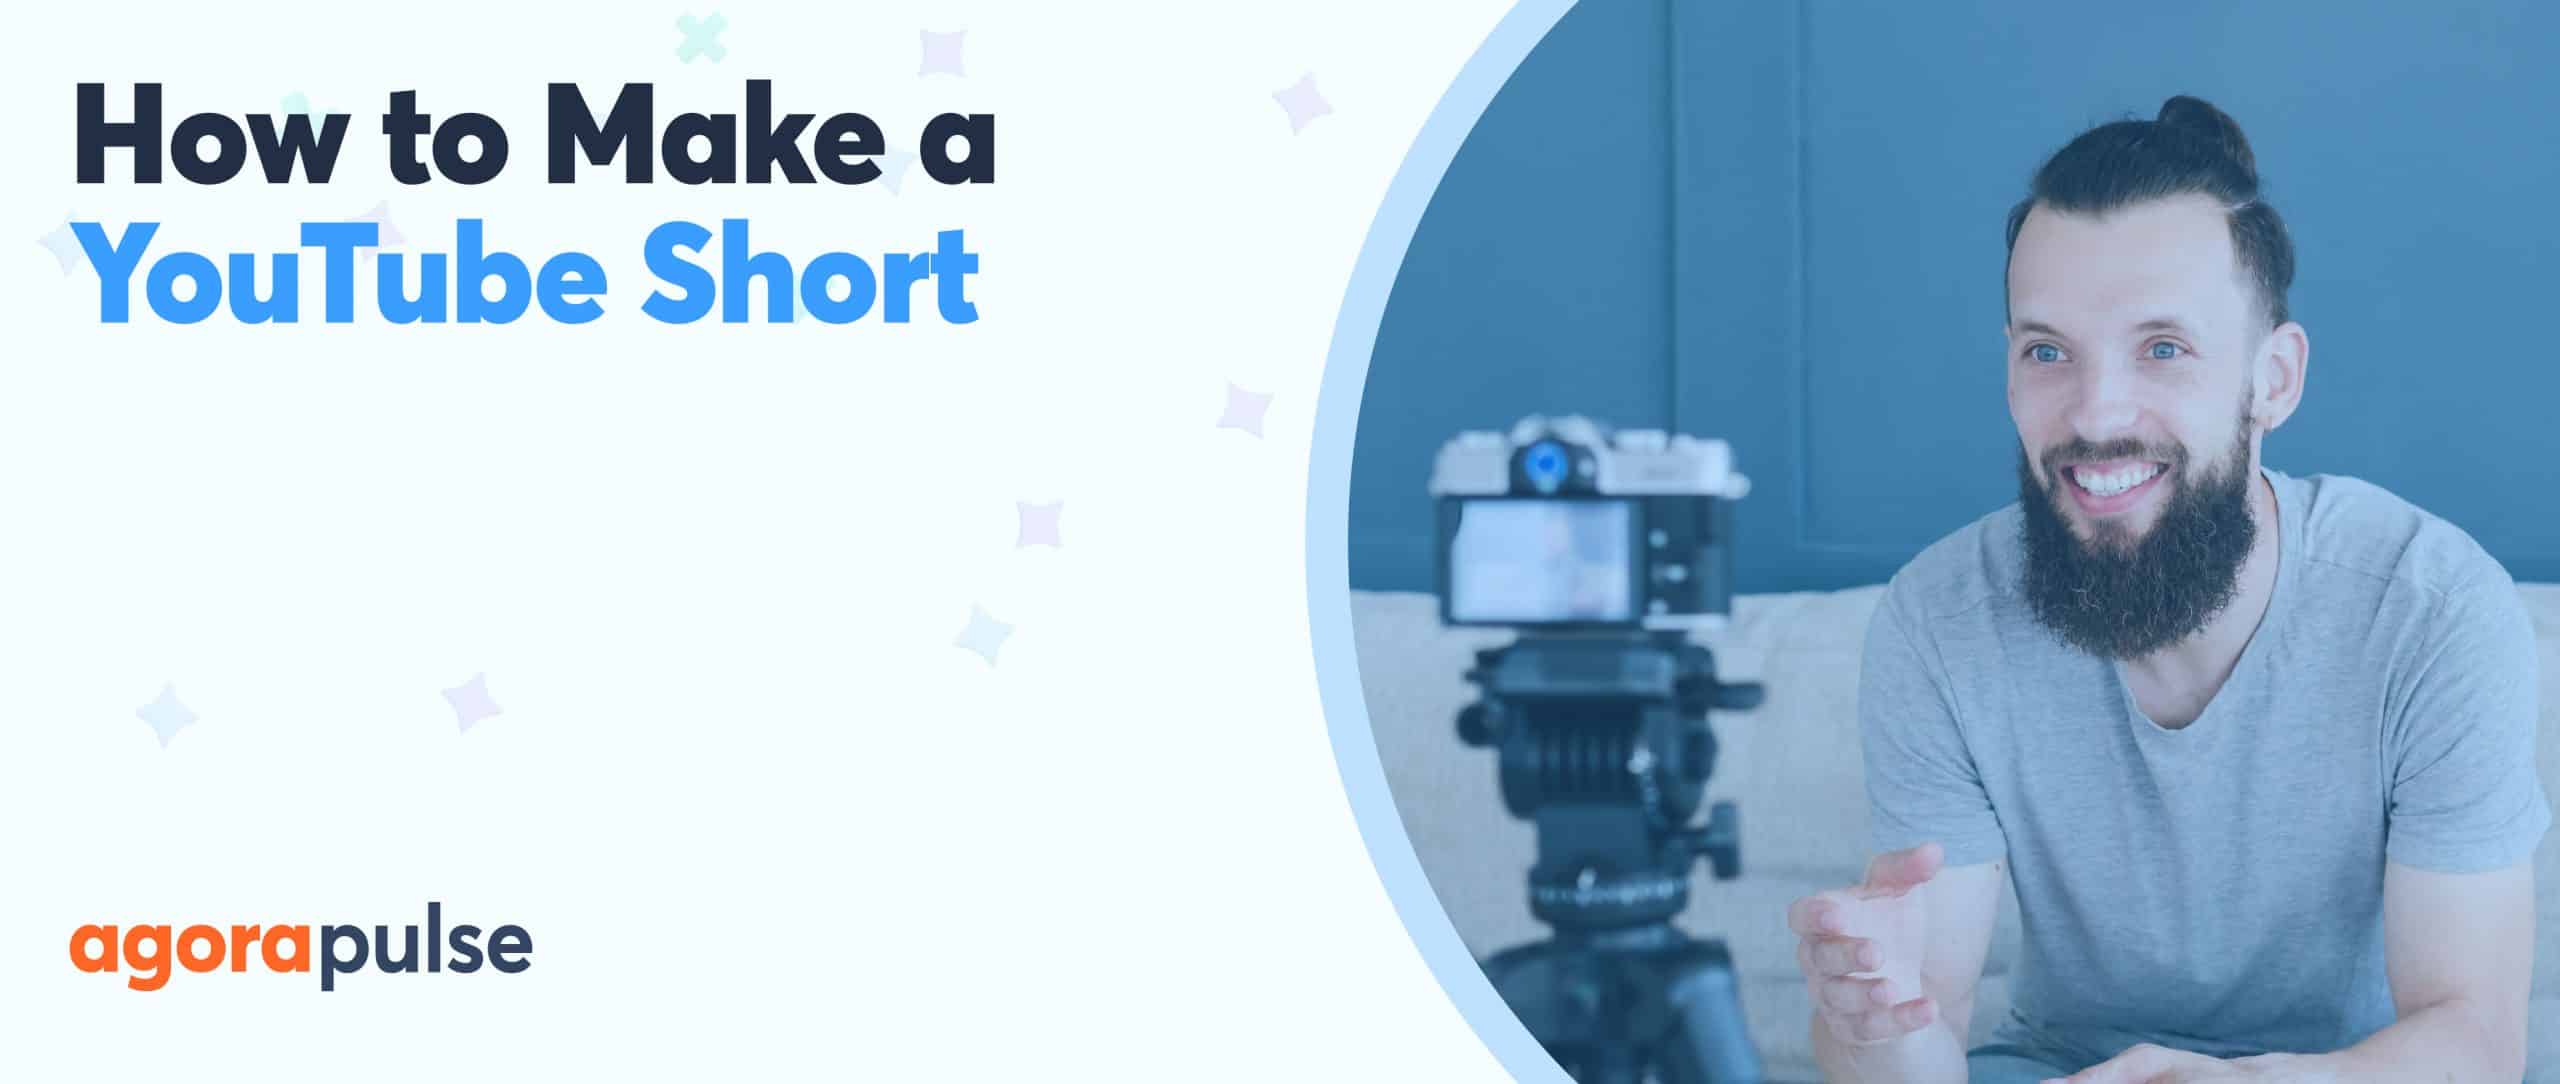 CapCut Launches 'Long Video to Shorts' to Turn Long, Horizontal